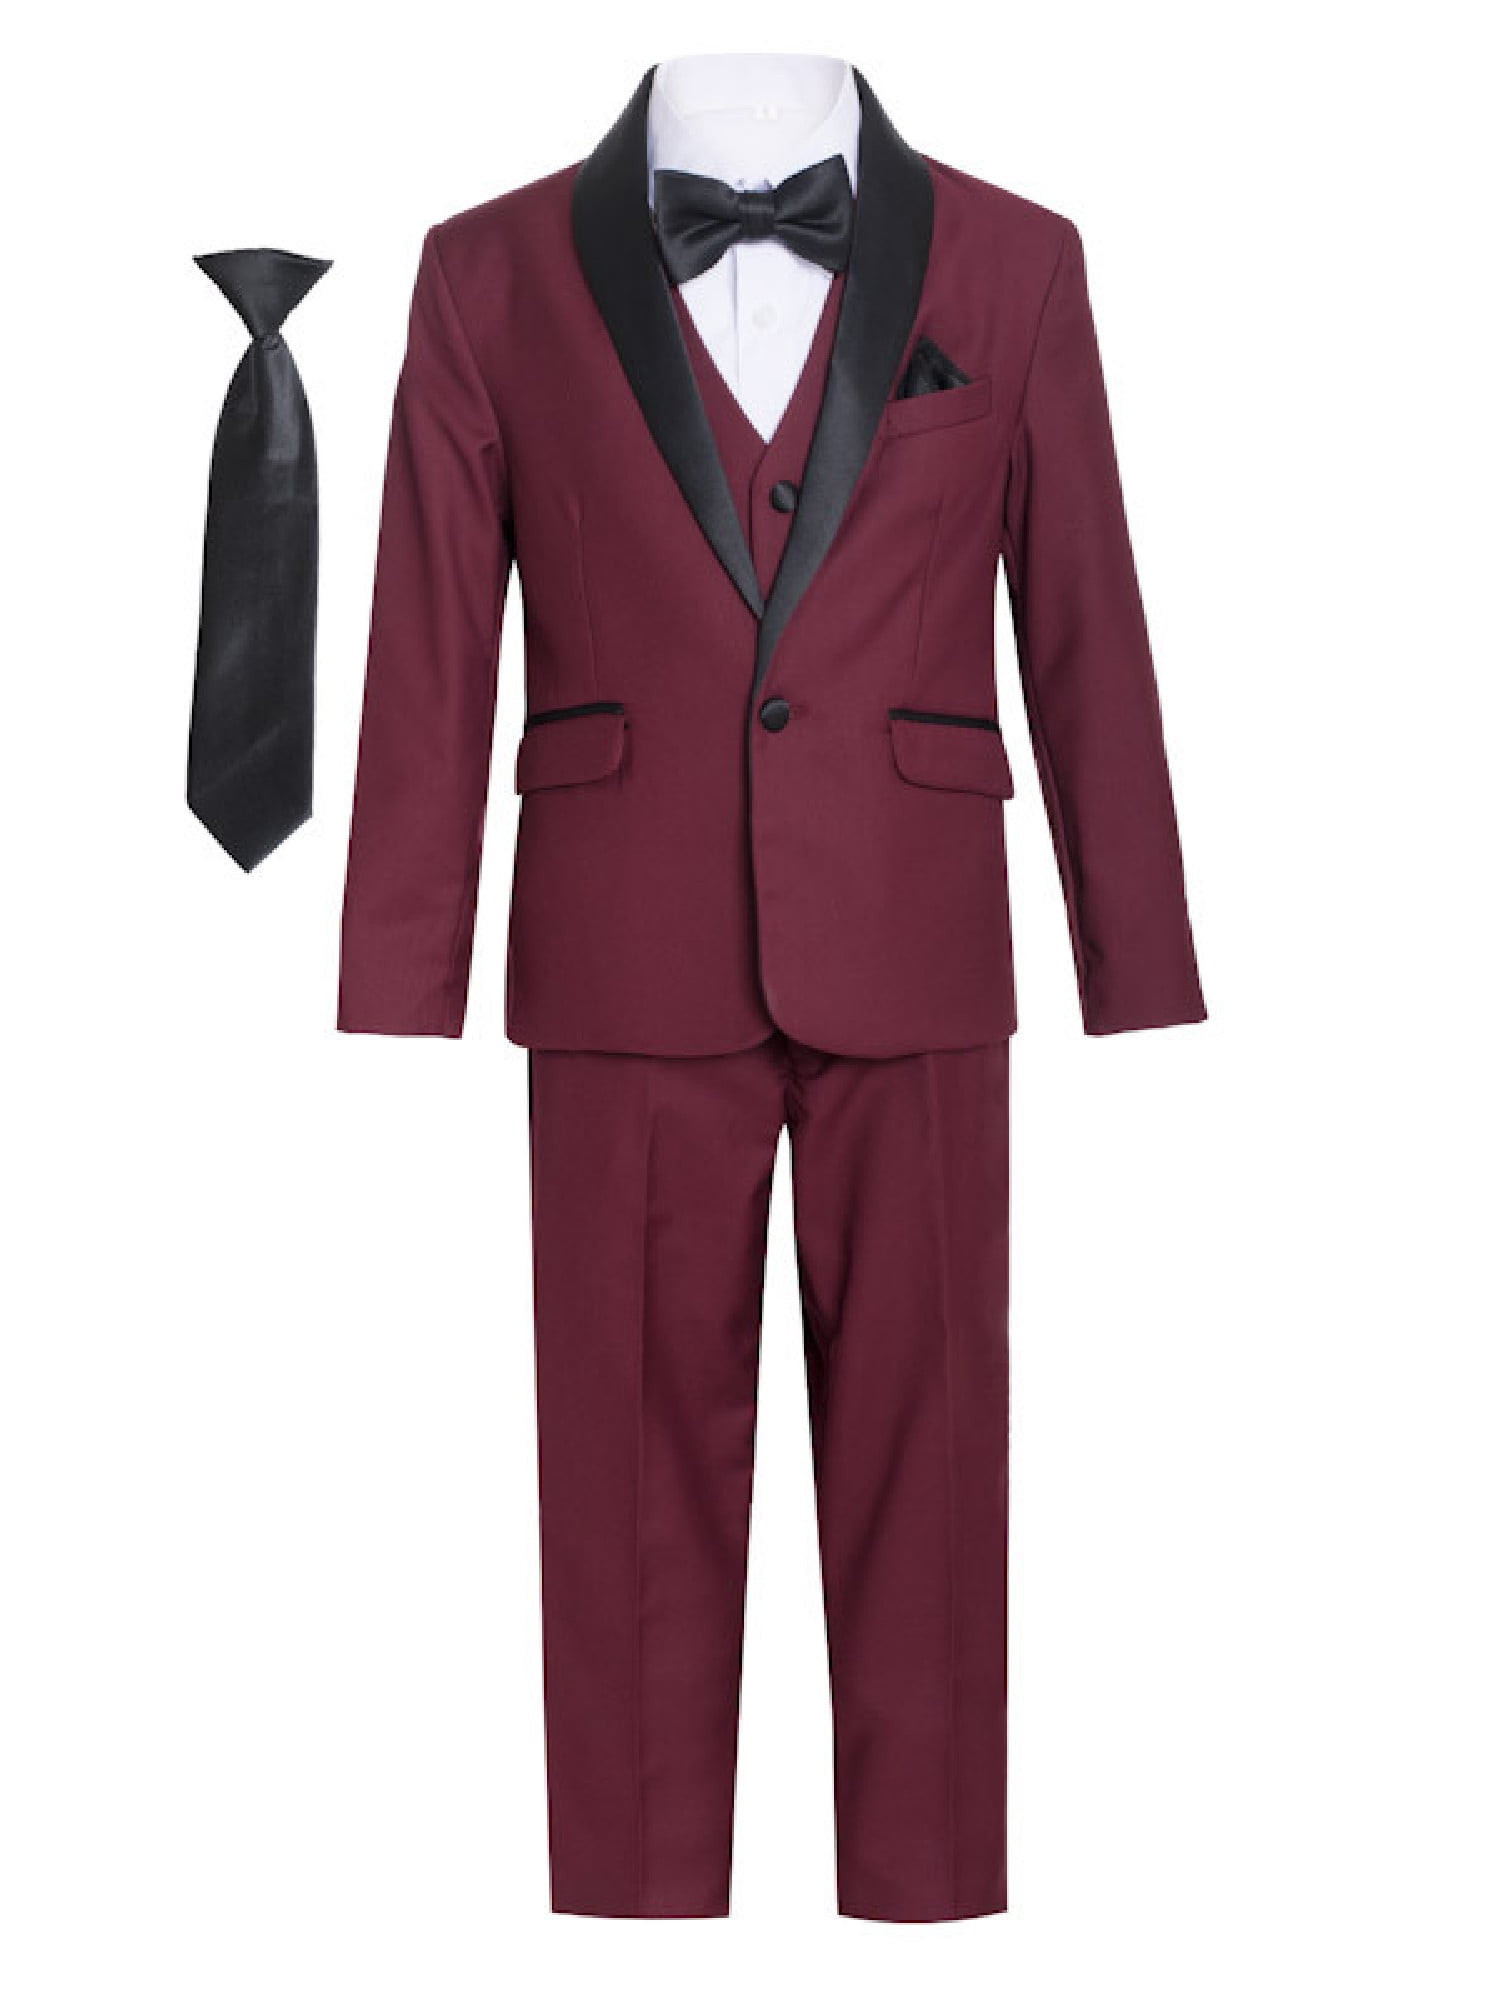 Boys Tuxedo Slim Fit Shawl Collar 7 Piece Formal Suit Set Size 12 Months 18 